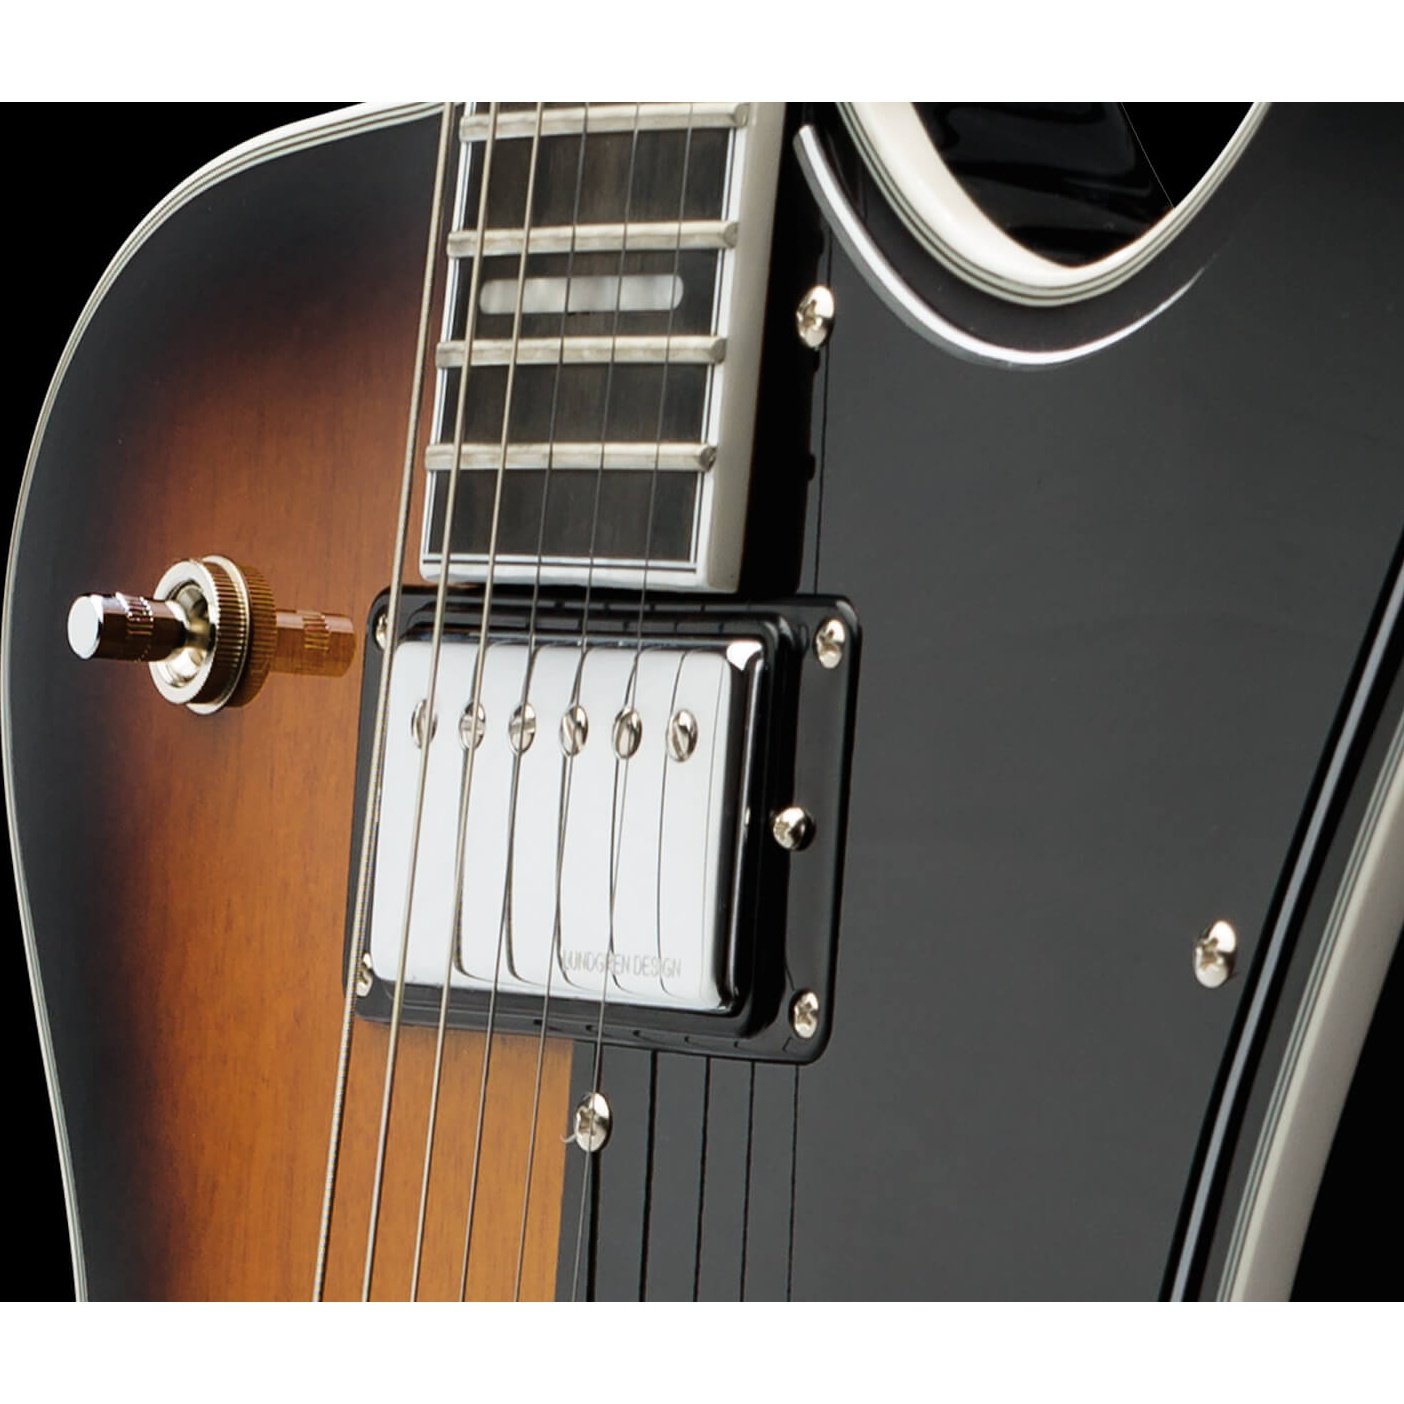 Hagstrom Fantomen Guitar in Tobacco Sunburst Gloss with Branded Hardcase